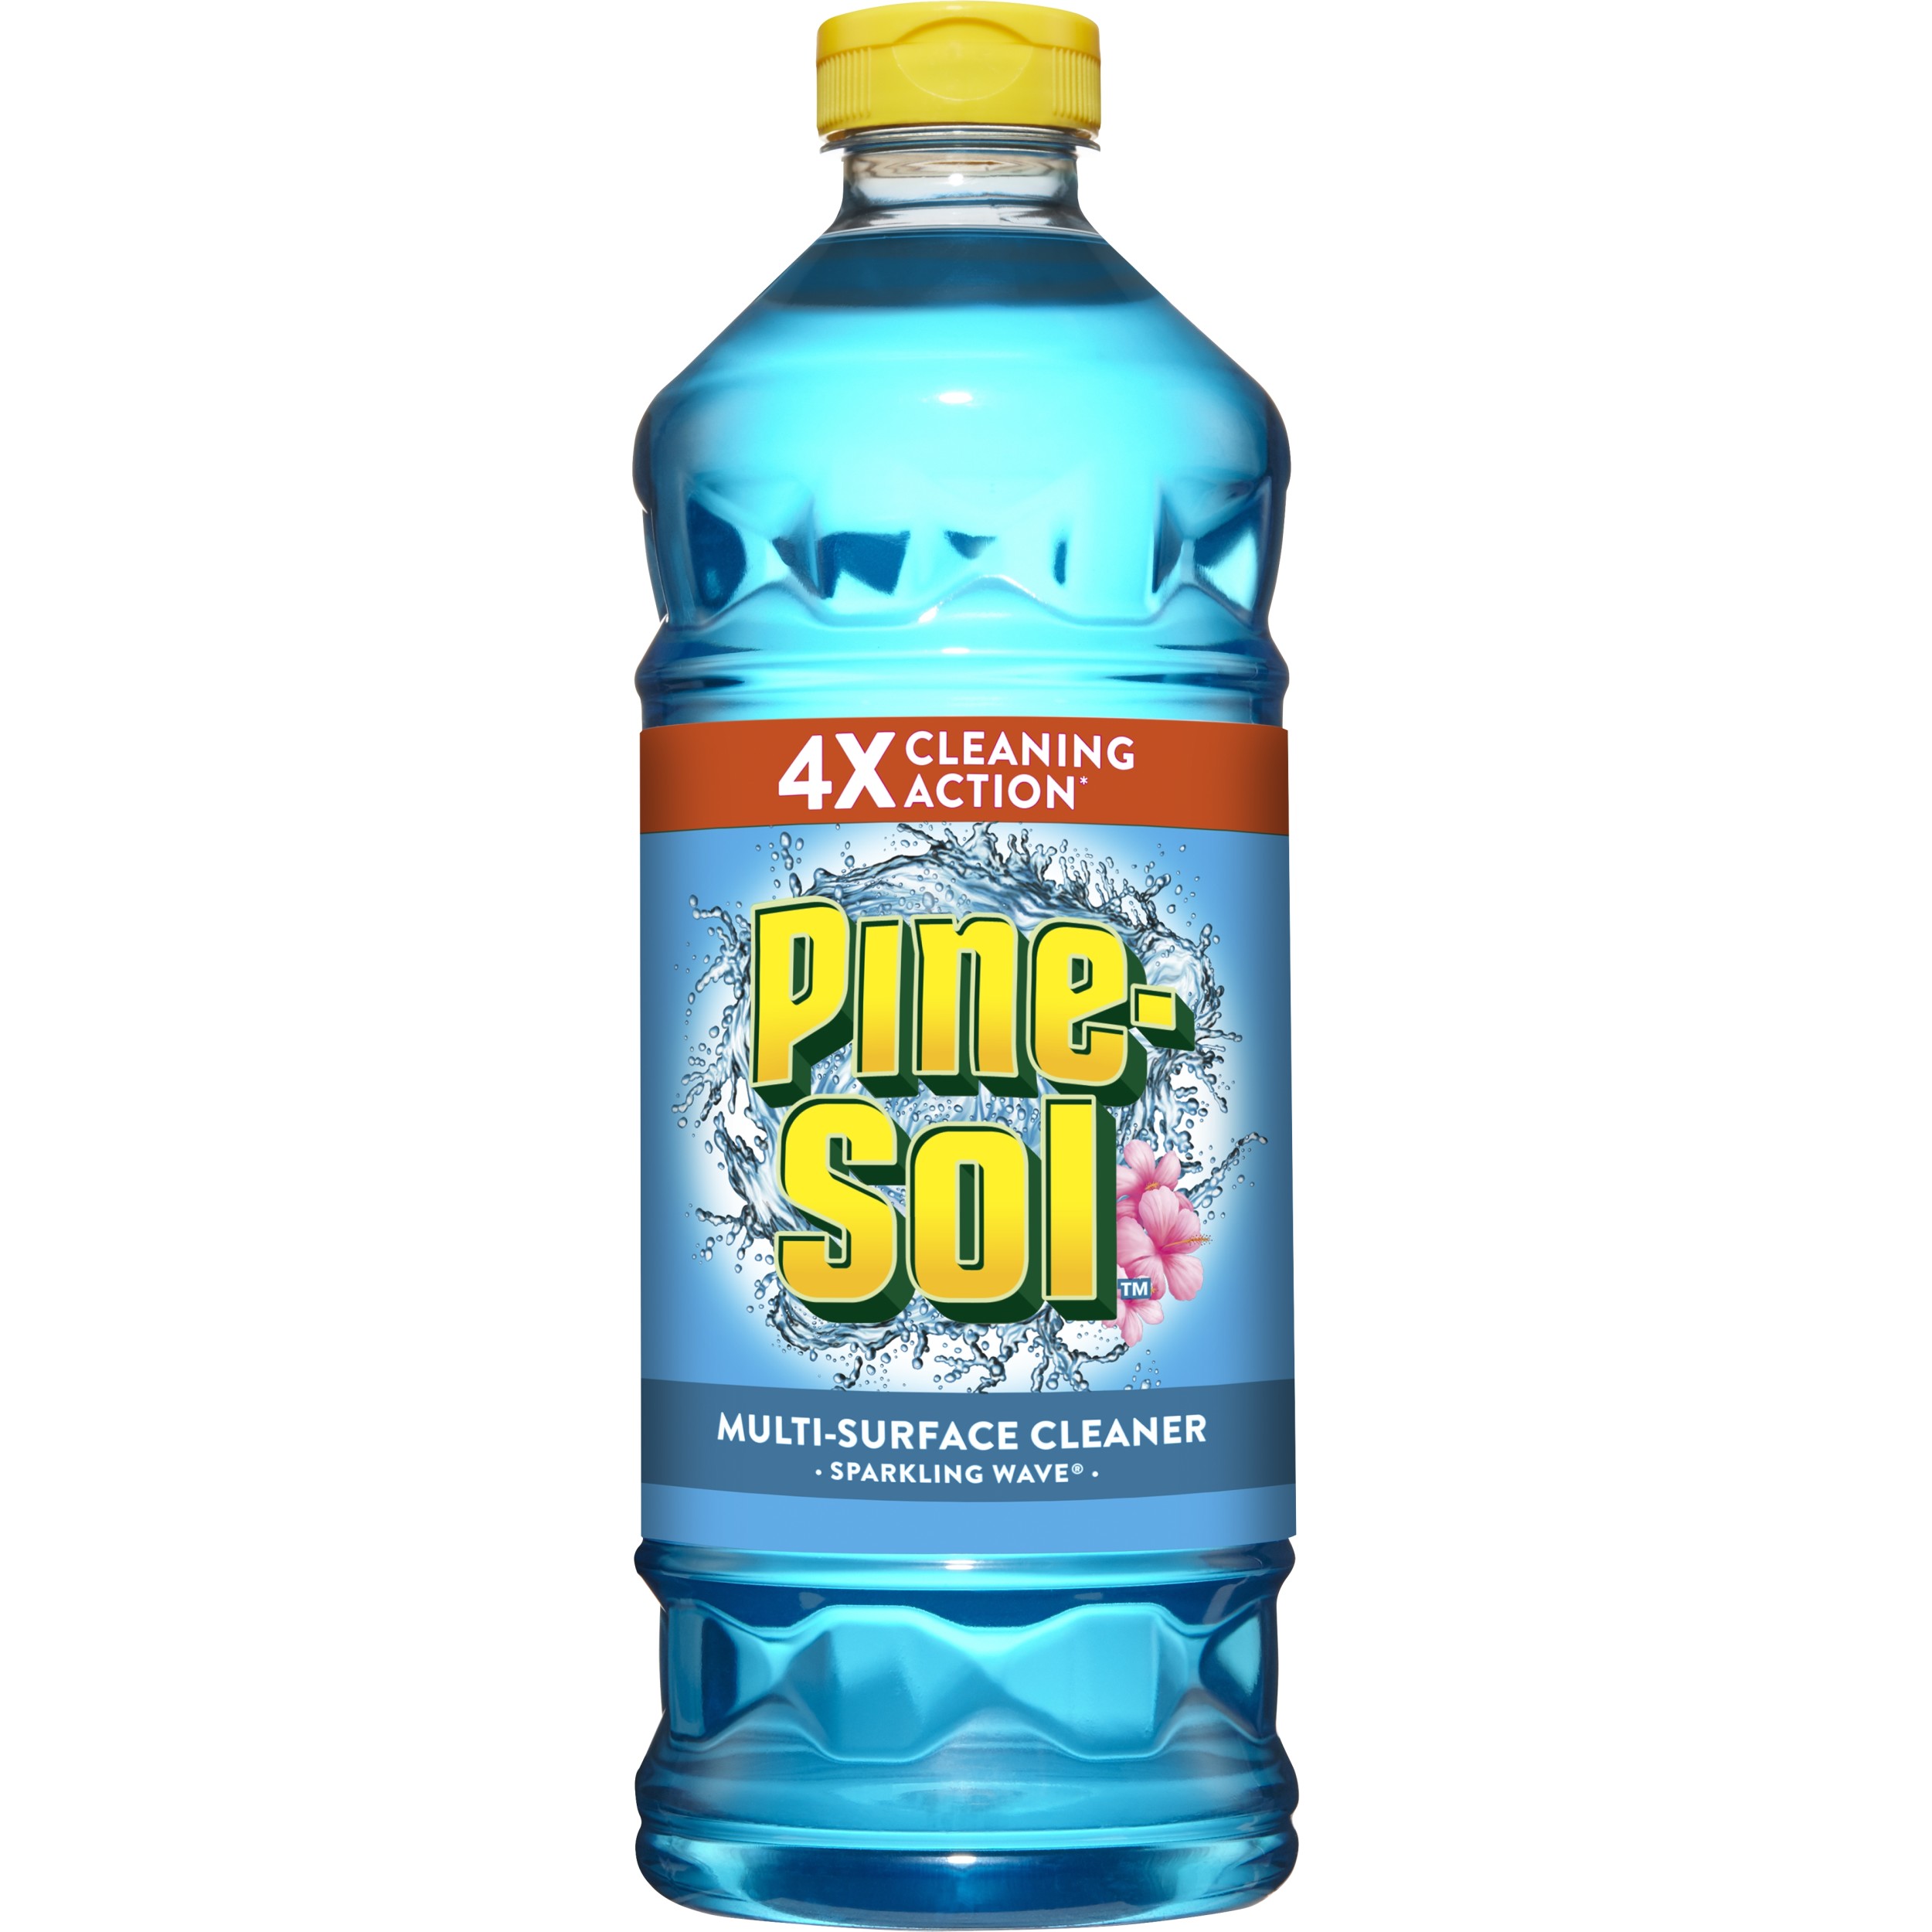 Pine-Sol All Purpose Cleaner, Sparkling Wave, 48 oz Bottle - image 10 of 10